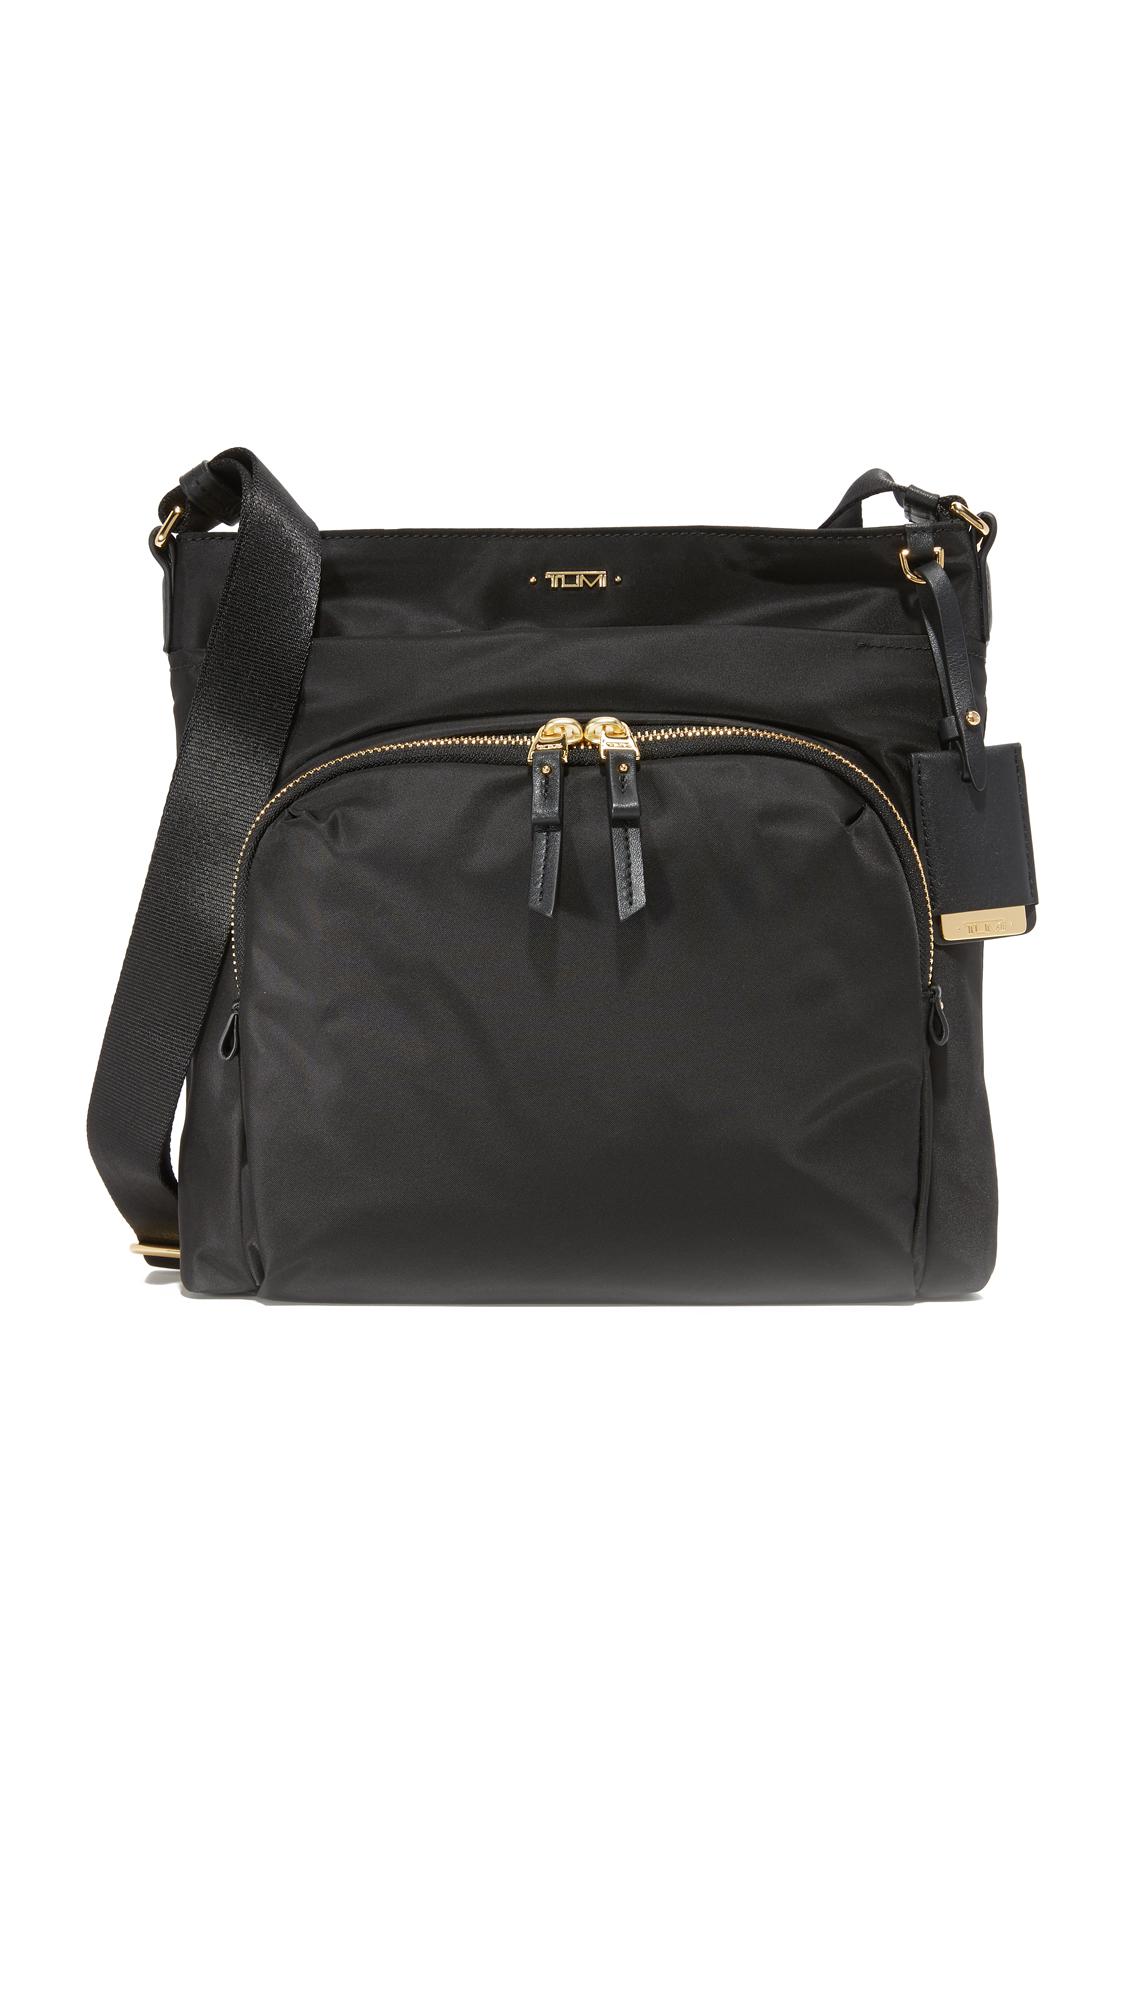 Lyst - Tumi Capri Shoulder Bag in Black